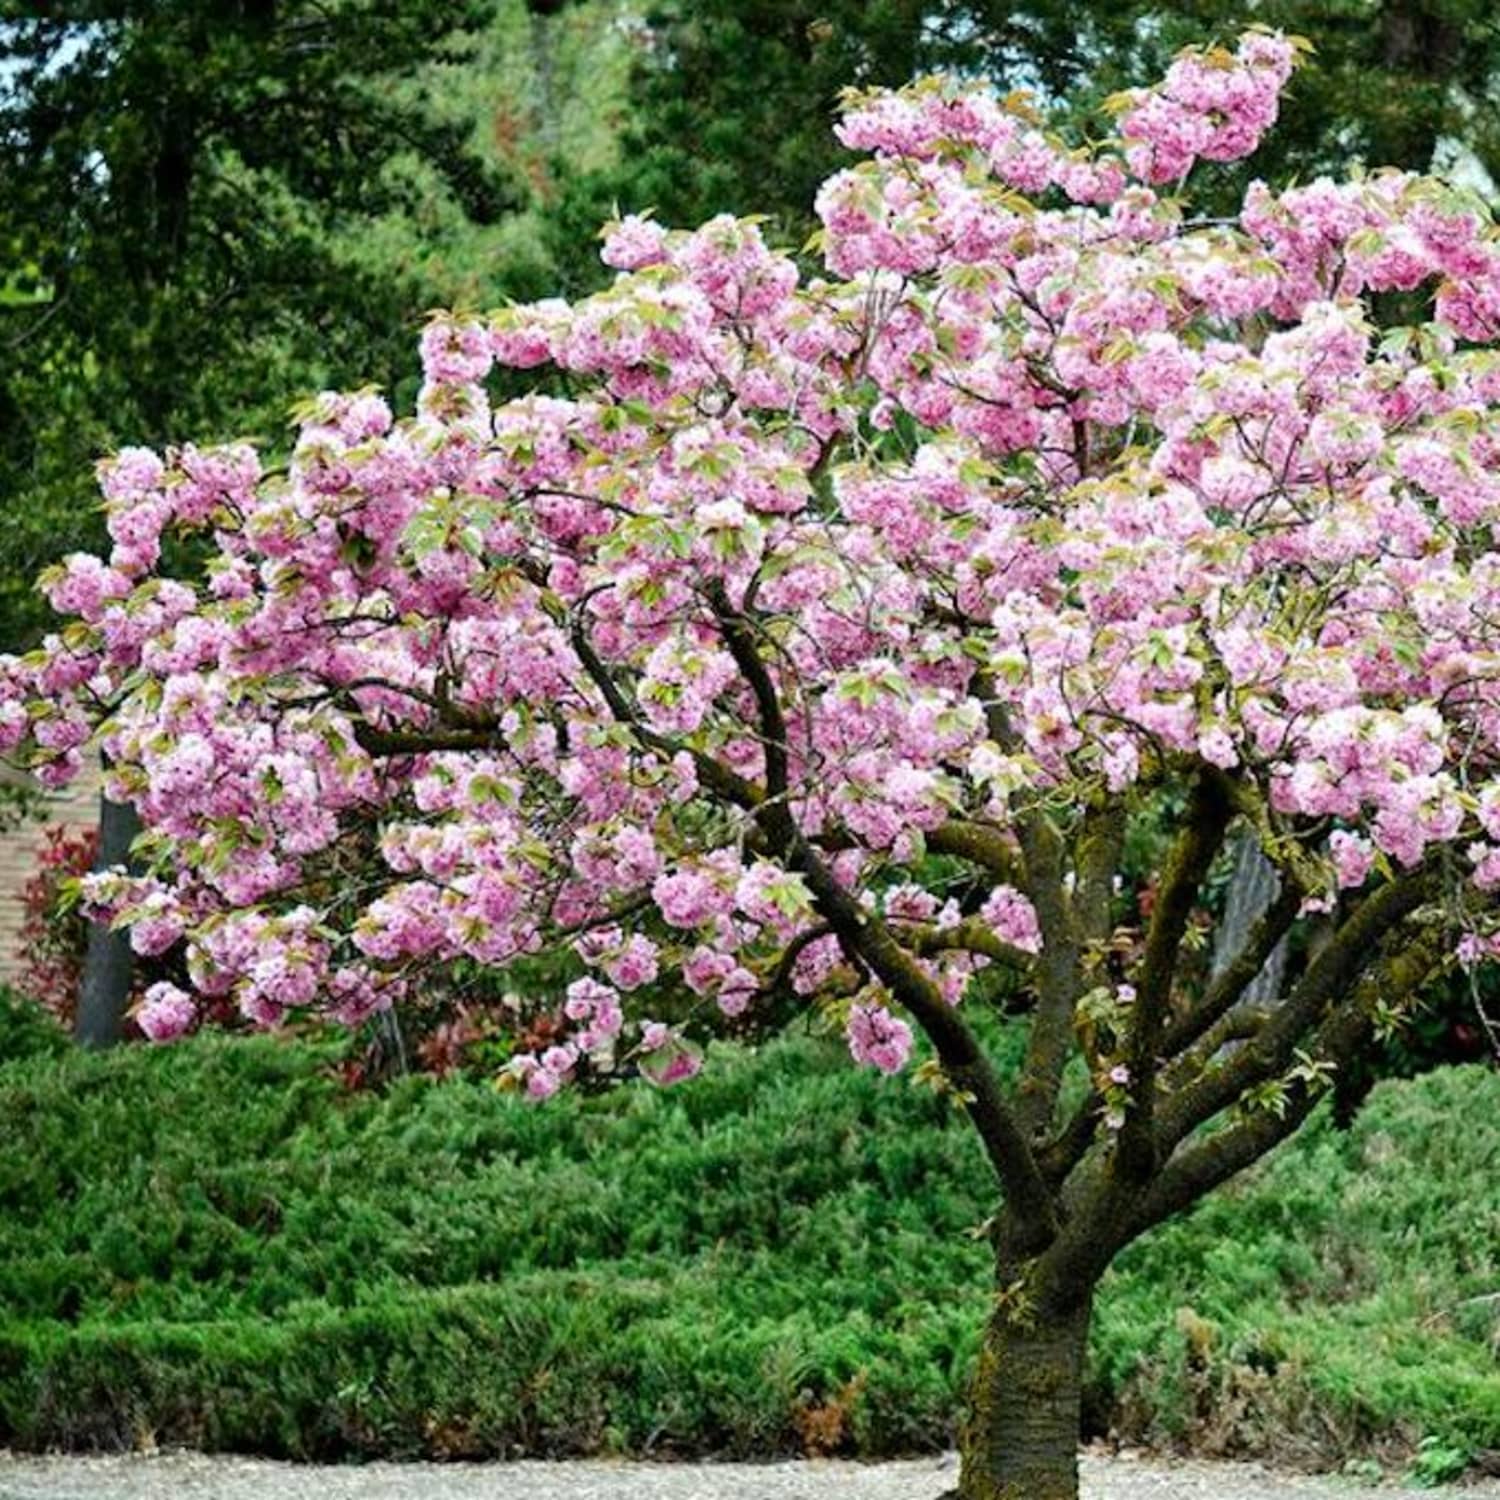 How to Care for a Cherry Blossom Tree